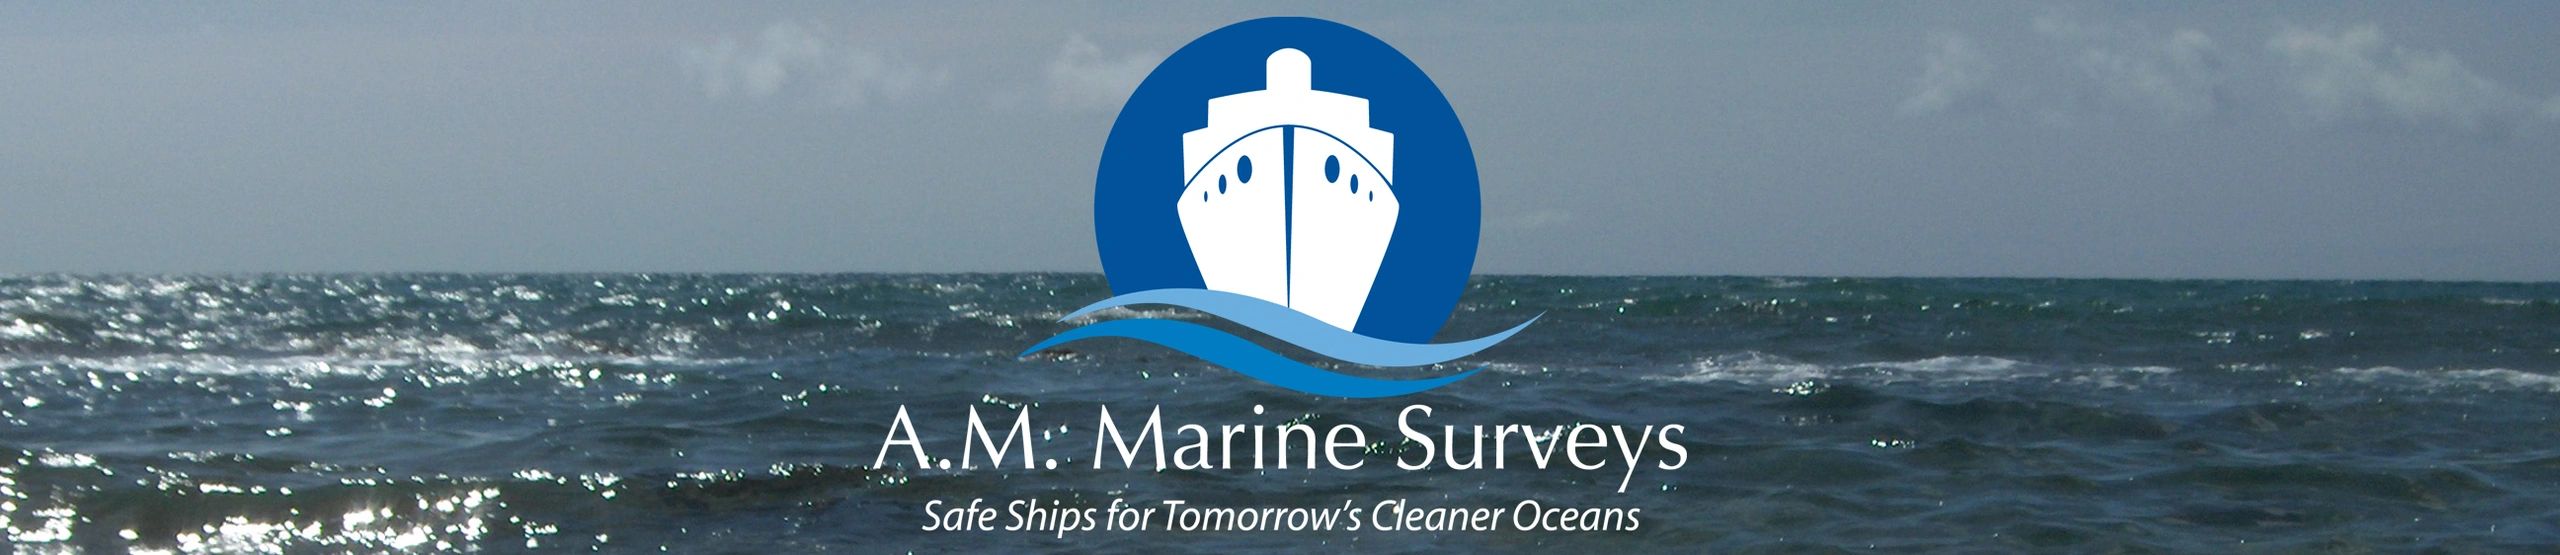 A.M. Marine Surveys